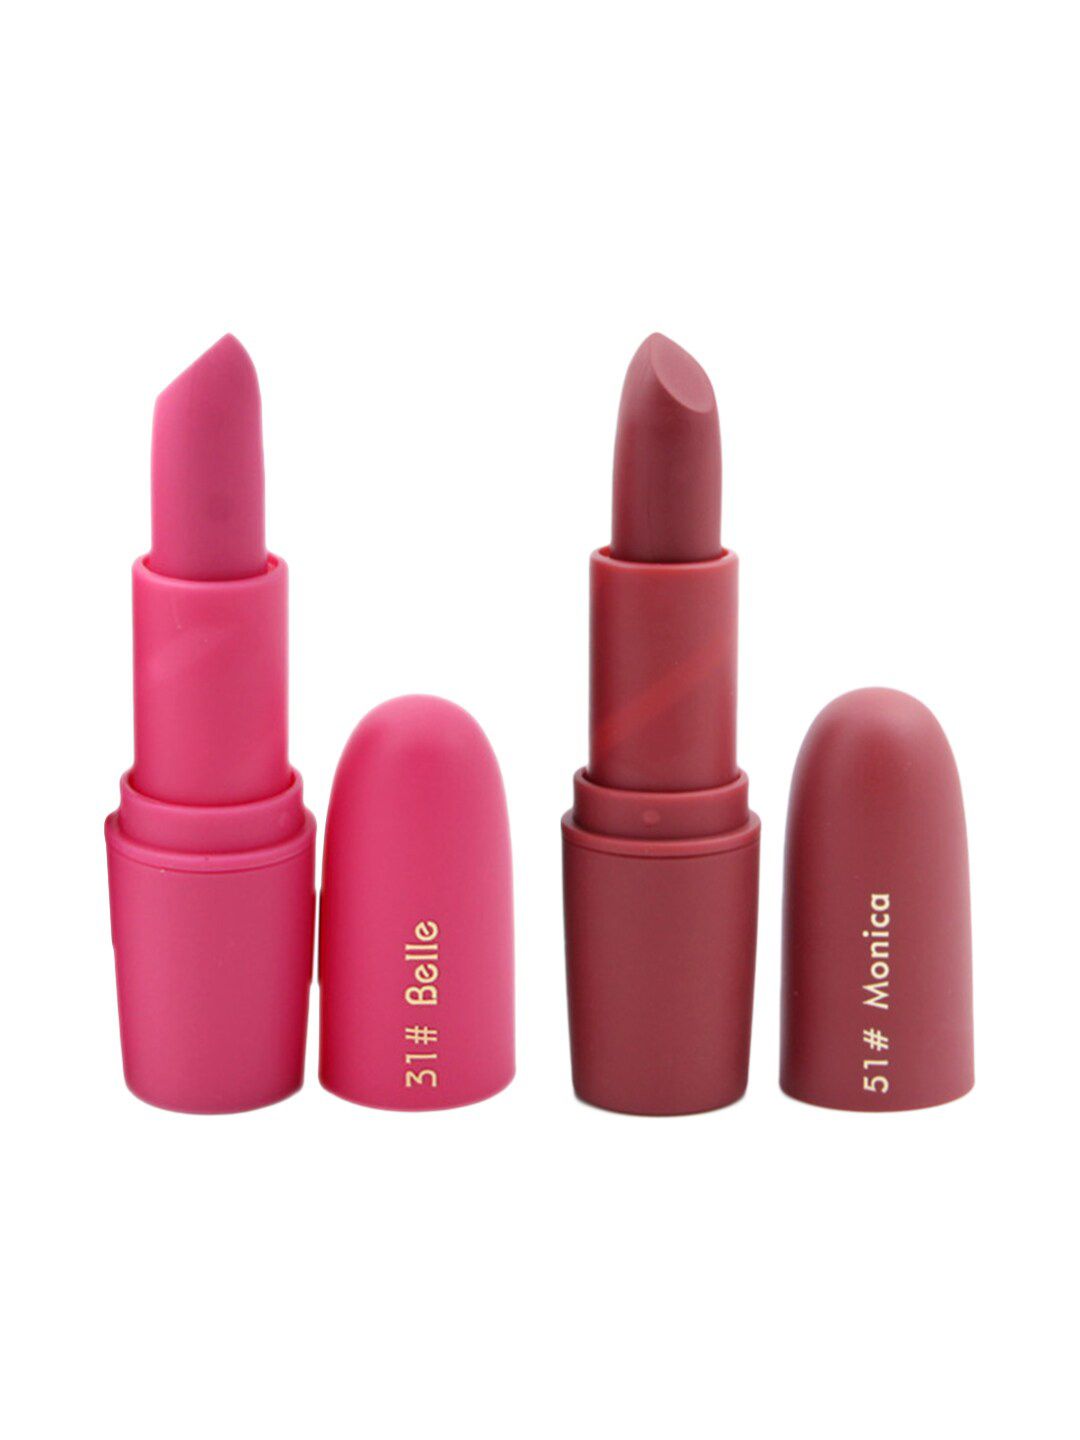 MISS ROSE Set of 2 Matte Creamy Lipsticks - Belle 31 & Monica 51 Price in India